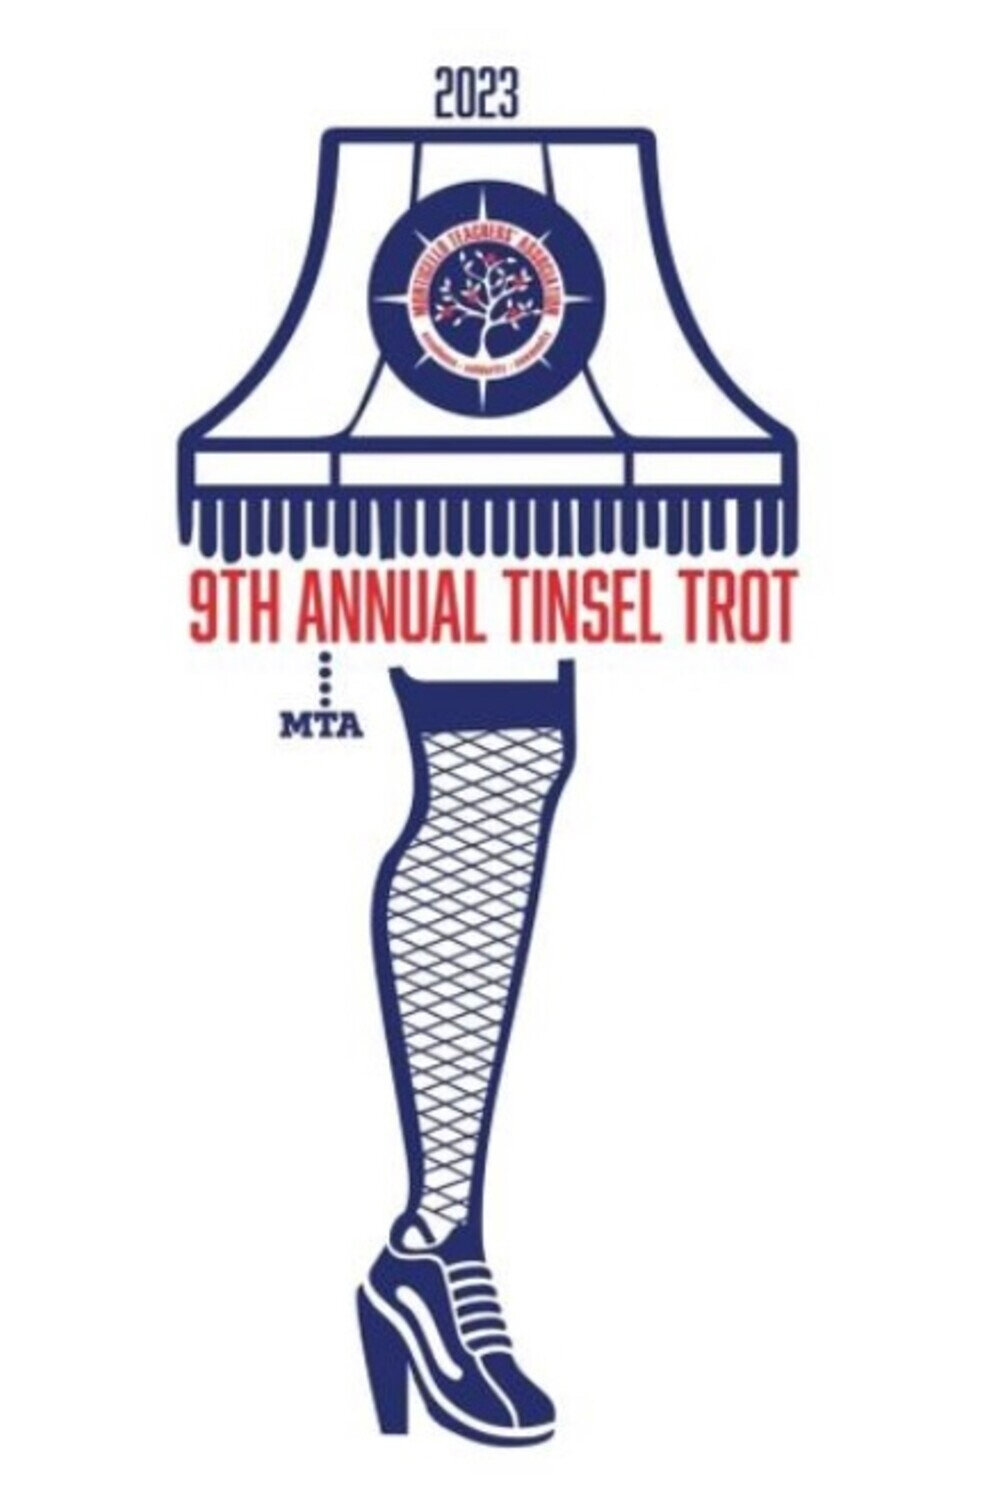 9th annual Tinsel Trot